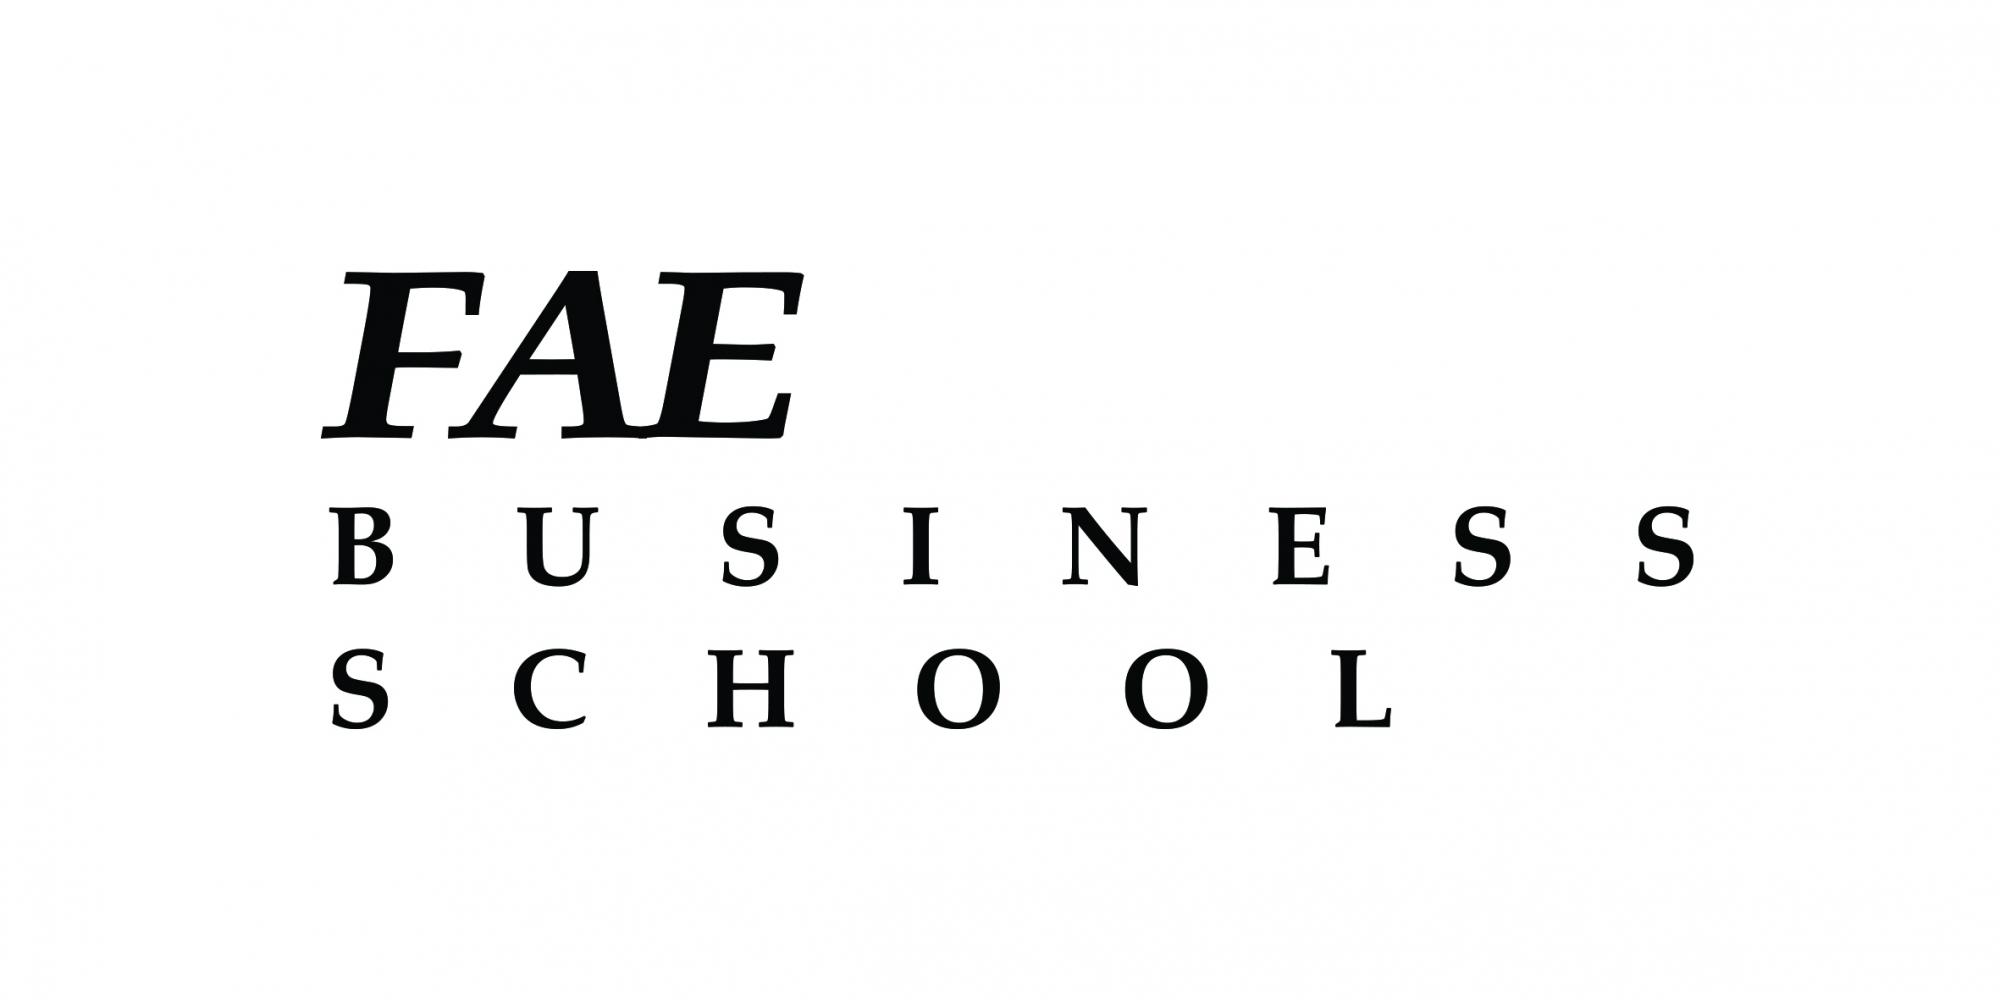 FAE BUSINESS SCHOOL